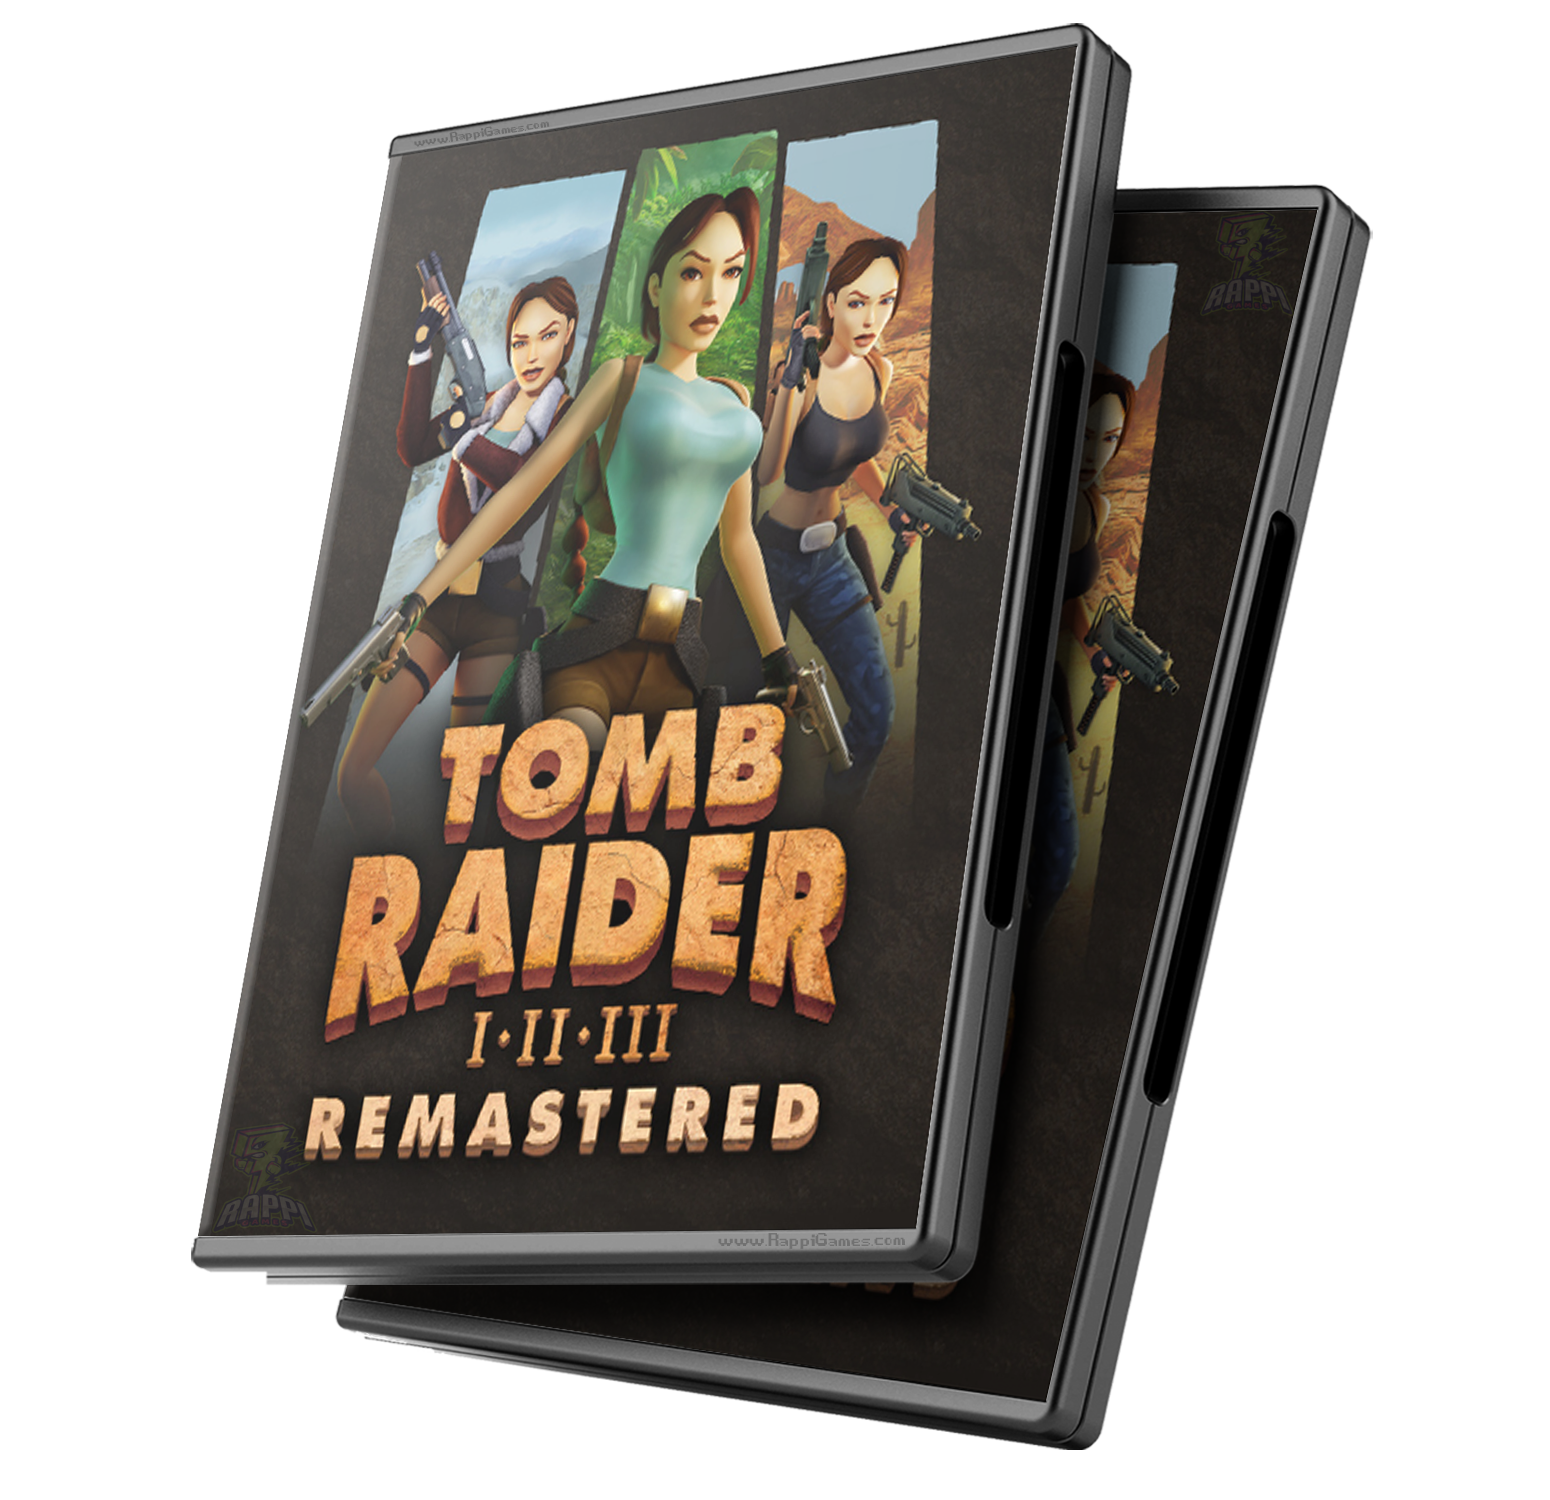 Tomb Raider I-III Remastered Starring Lara Croft - Pc